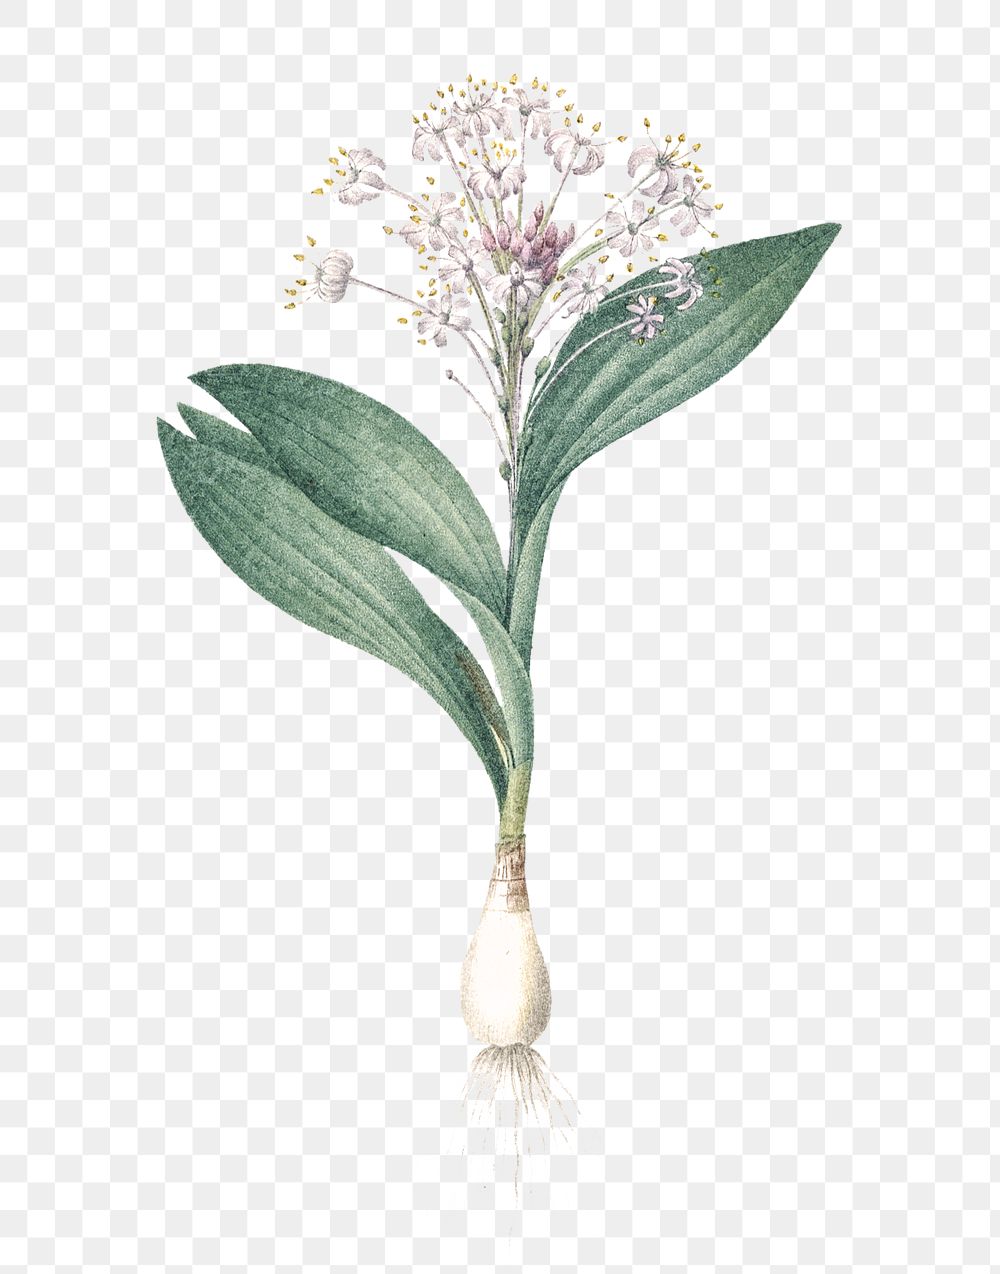 Pygmy hyacinth png sticker, vintage botanical illustration, transparent background